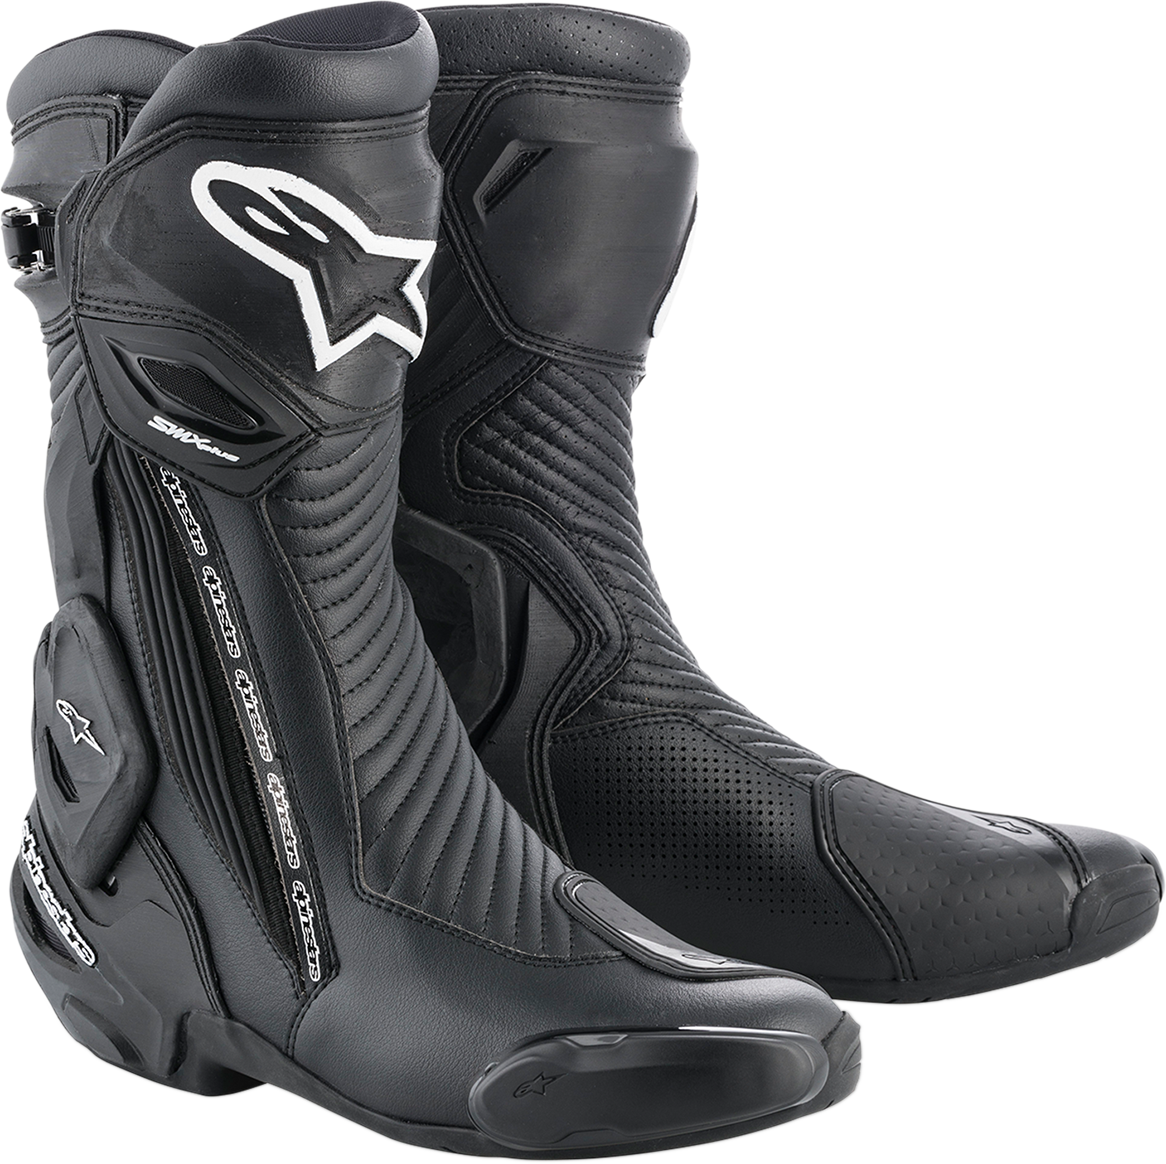 ALPINESTARS SMX+ Boots - Black - US 12 / EU 47 2221019-10-47